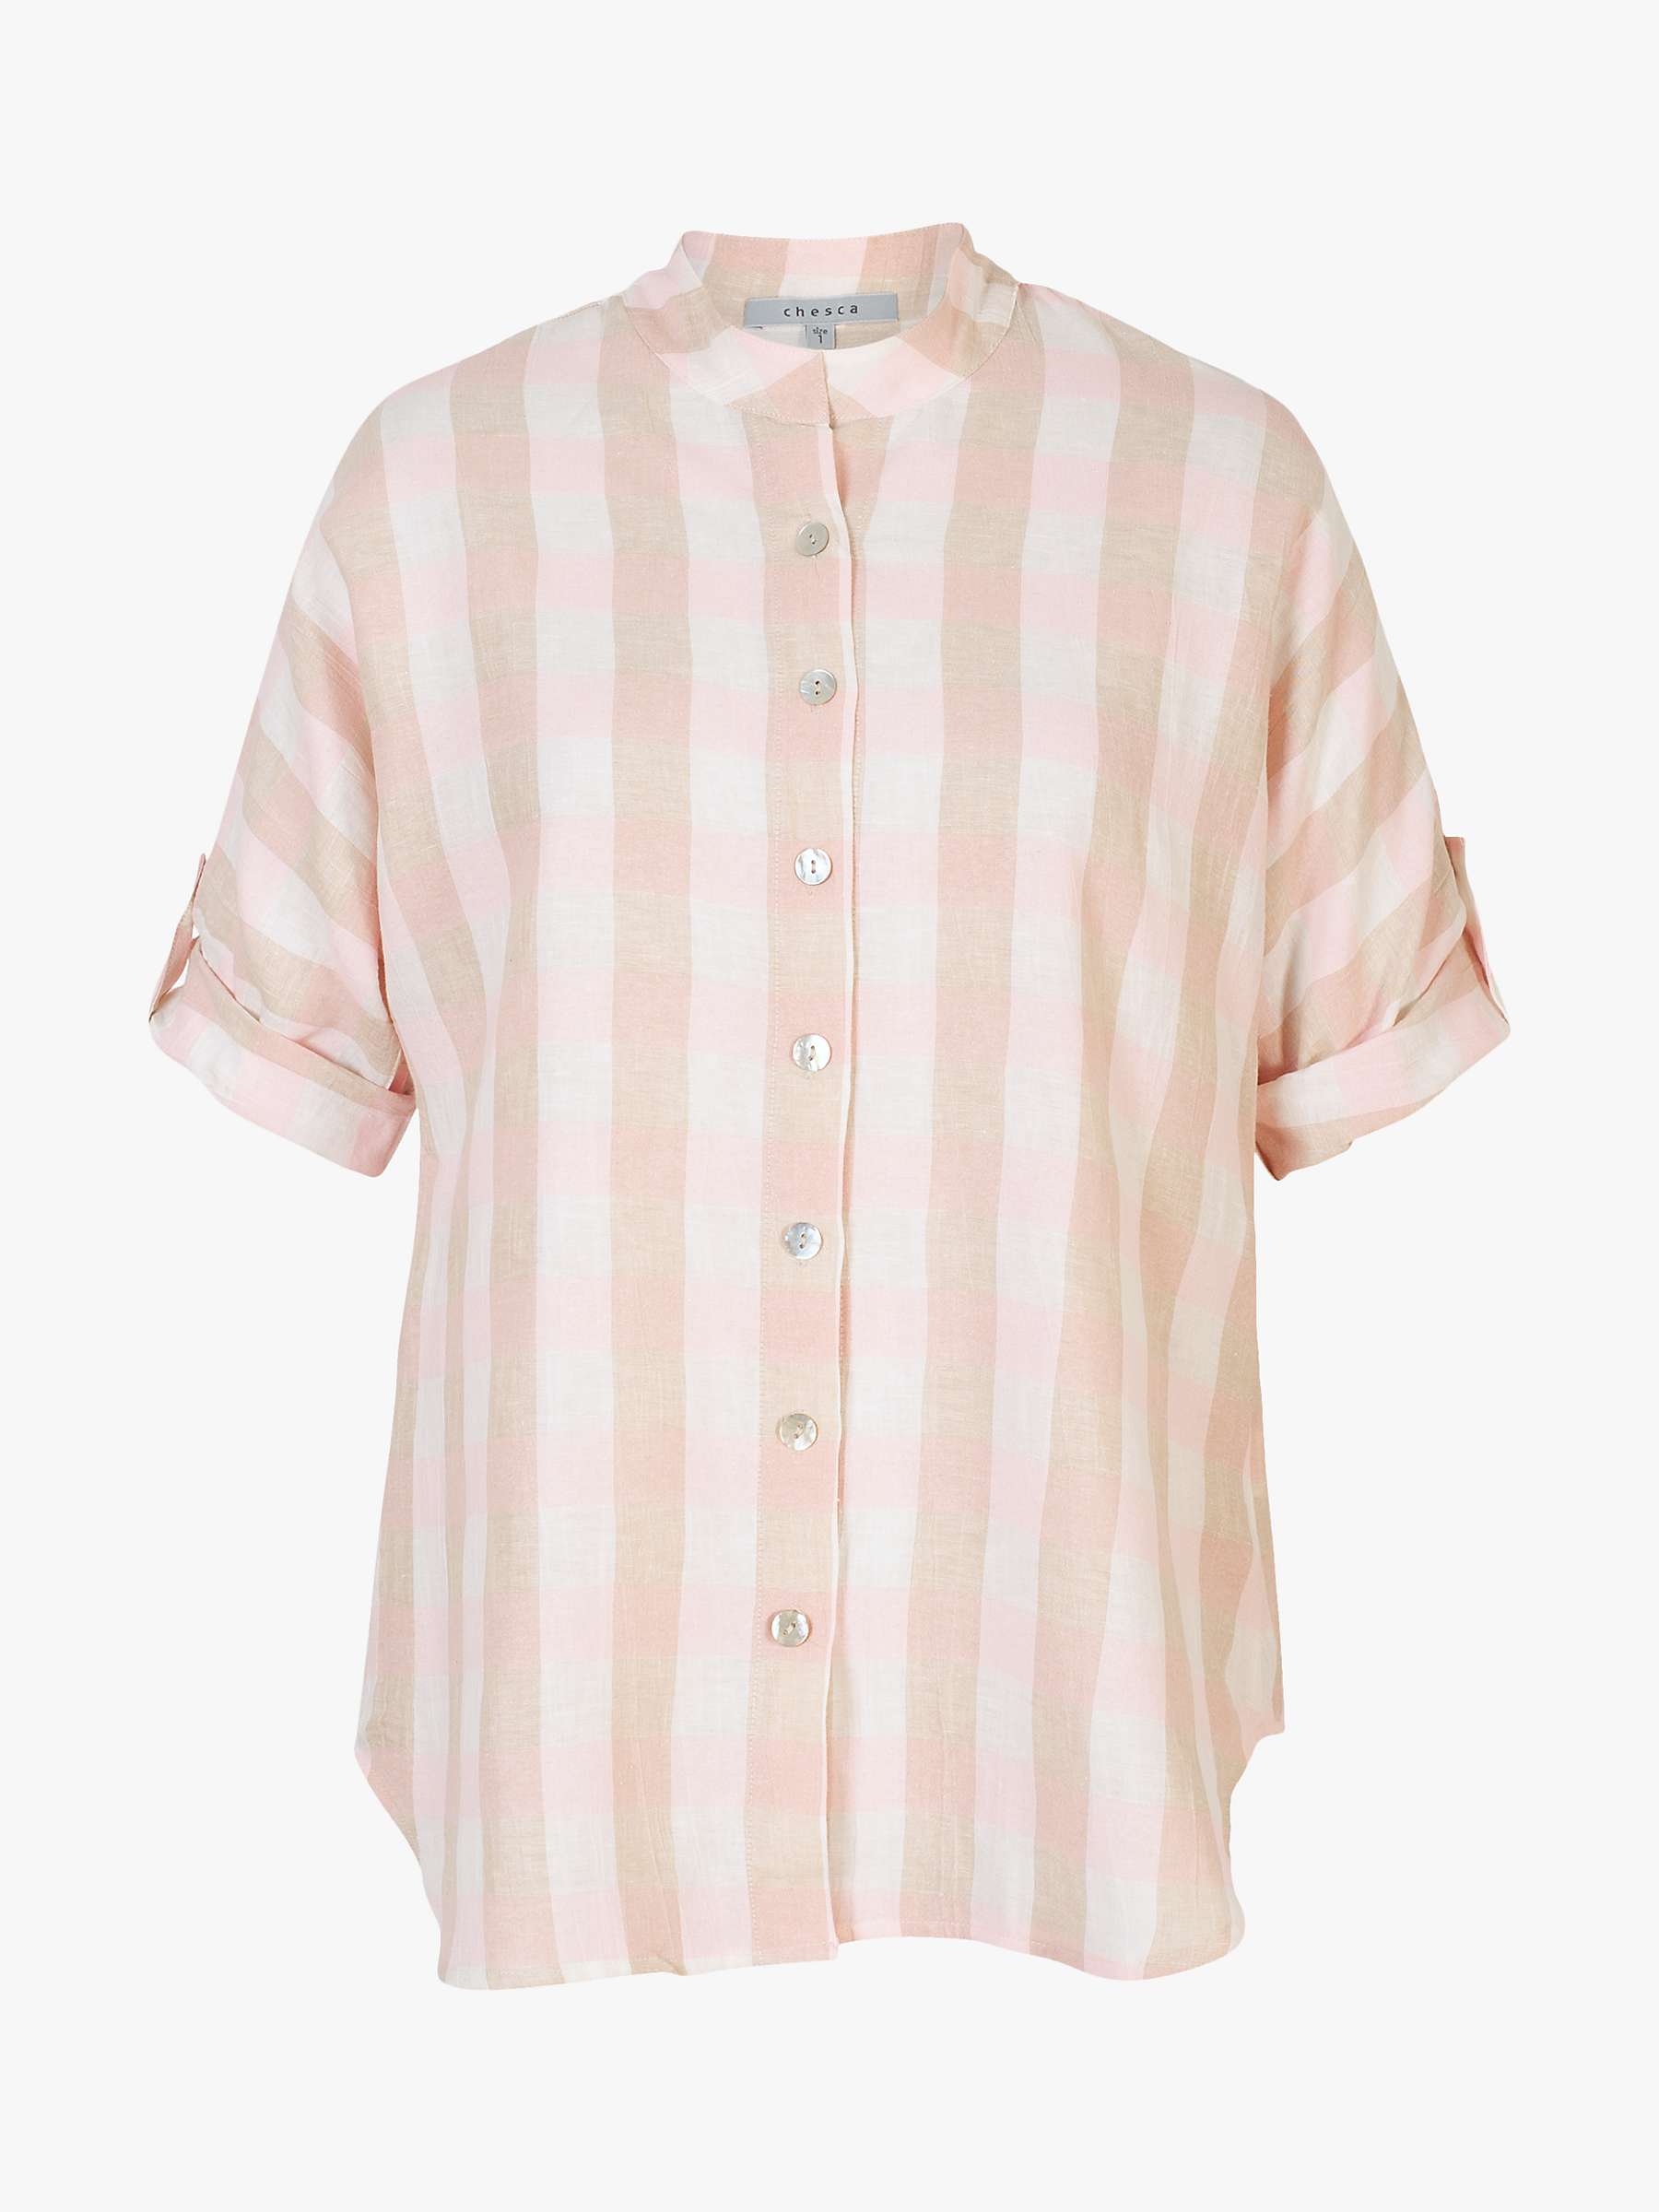 Buy chesca Check Linen Blend Shirt, Blush Online at johnlewis.com